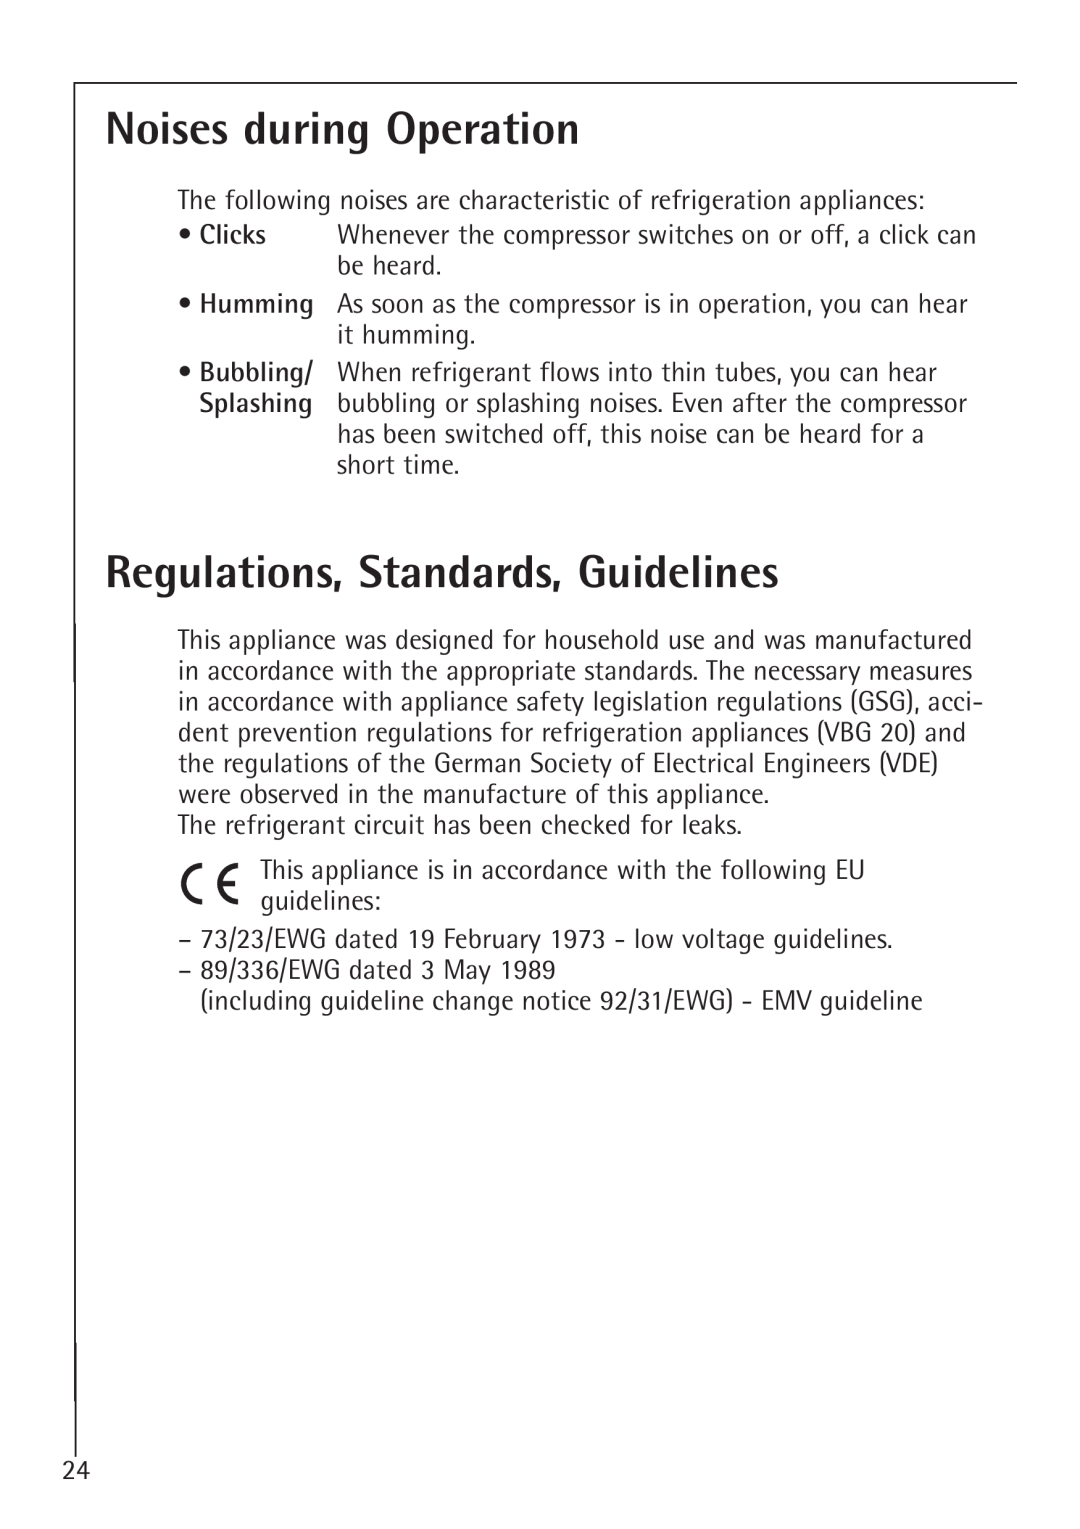 AEG 1450-7 TK manual Noises during Operation, Regulations, Standards, Guidelines 